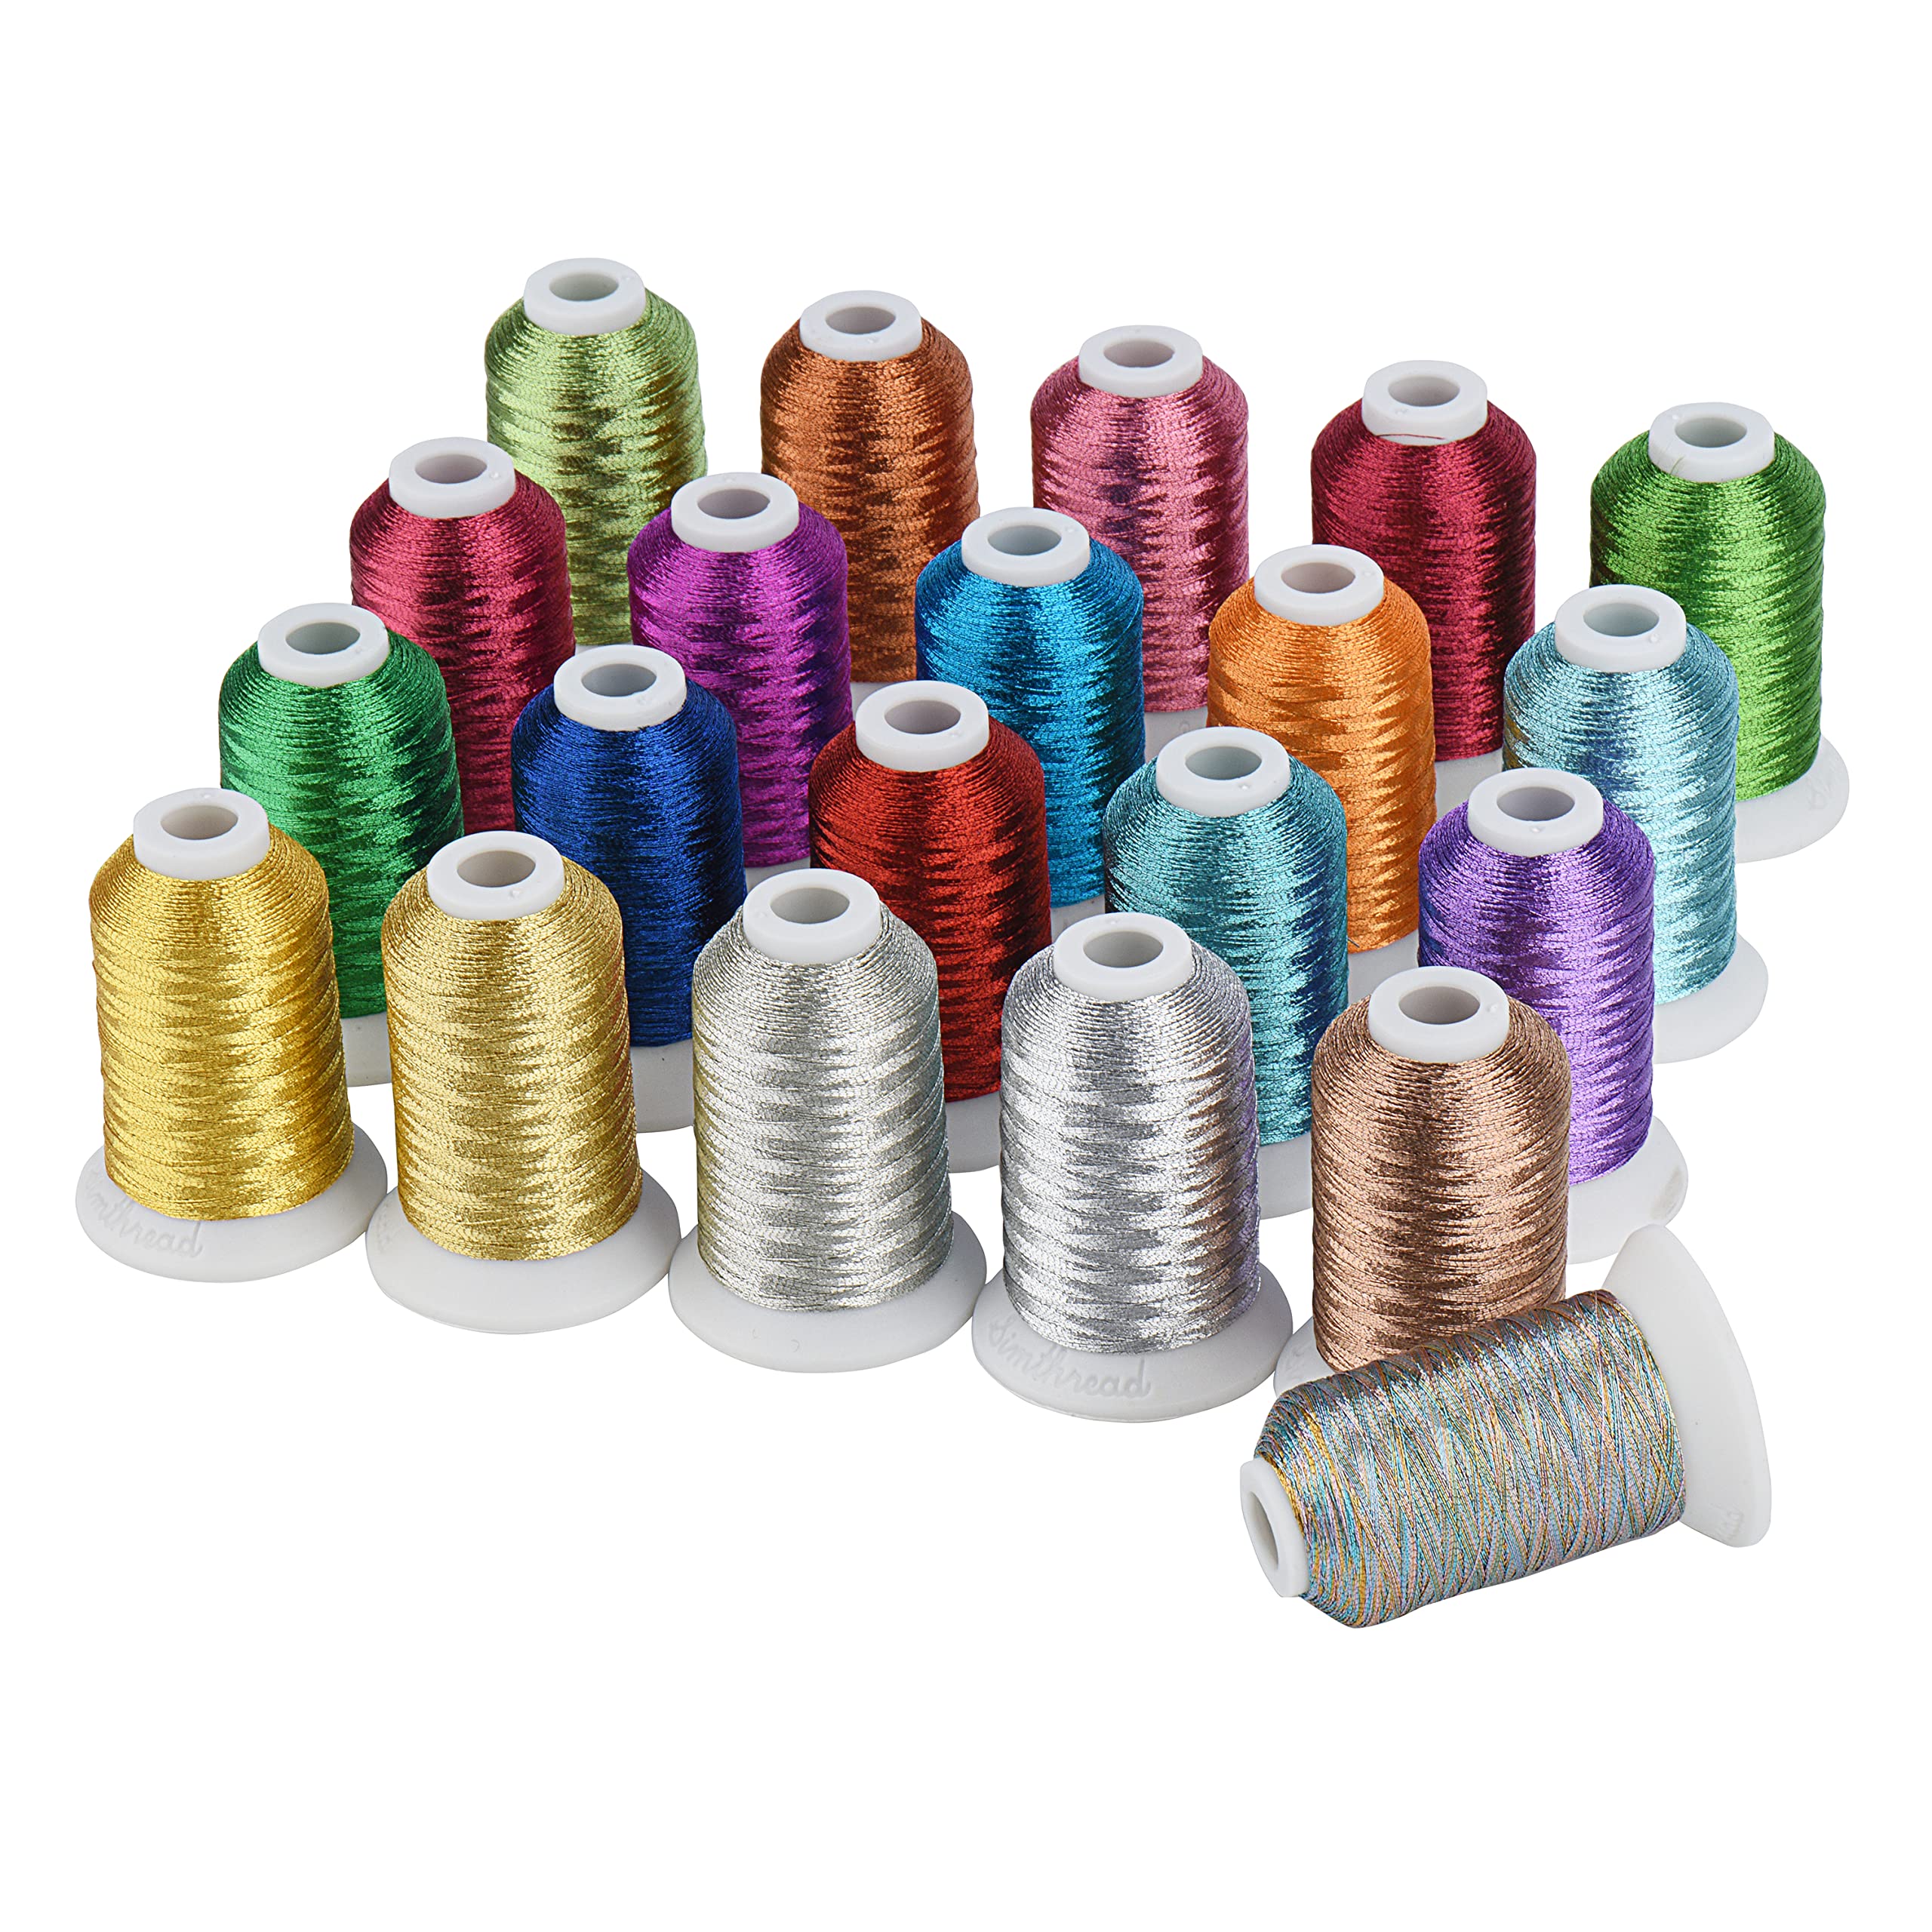 Simthread Size A Class 15 SA156 Prewound Bobbin Thread 60wt Brother —  Simthread - High Quality Machine Embroidery Thread Supplier